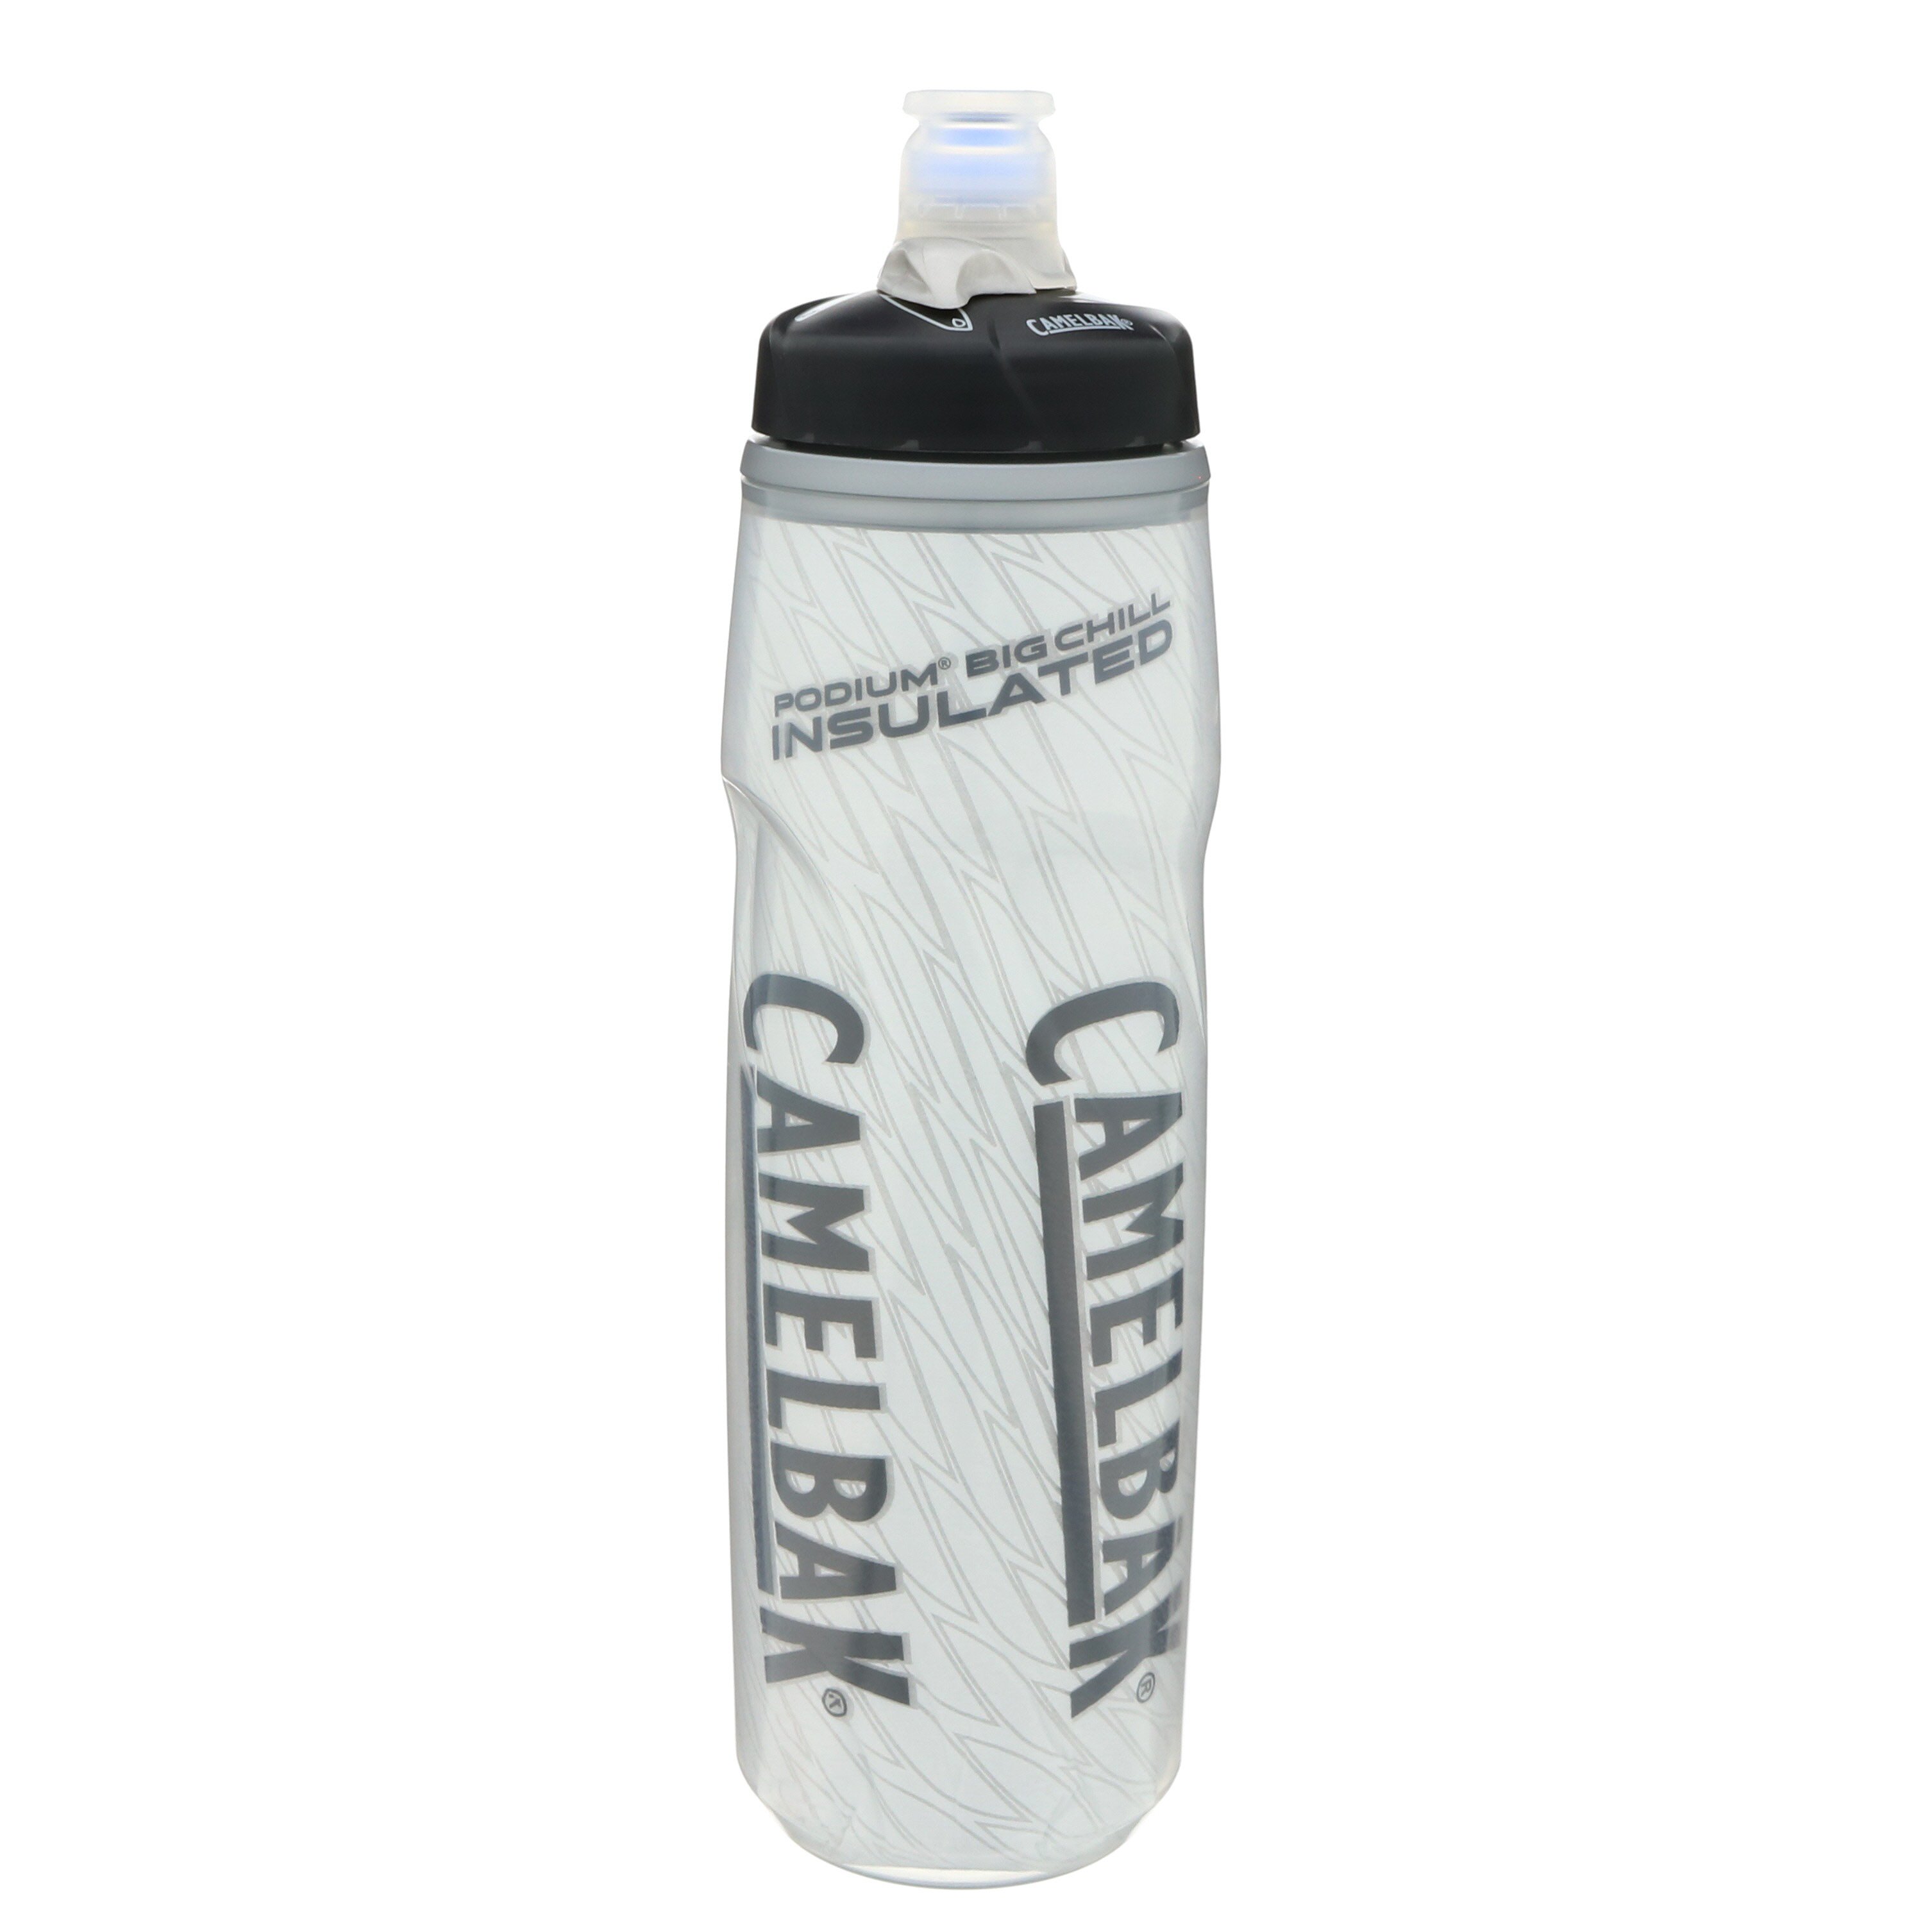 CamelBak Podium Big Chill 25oz Insulated Water Bottle 